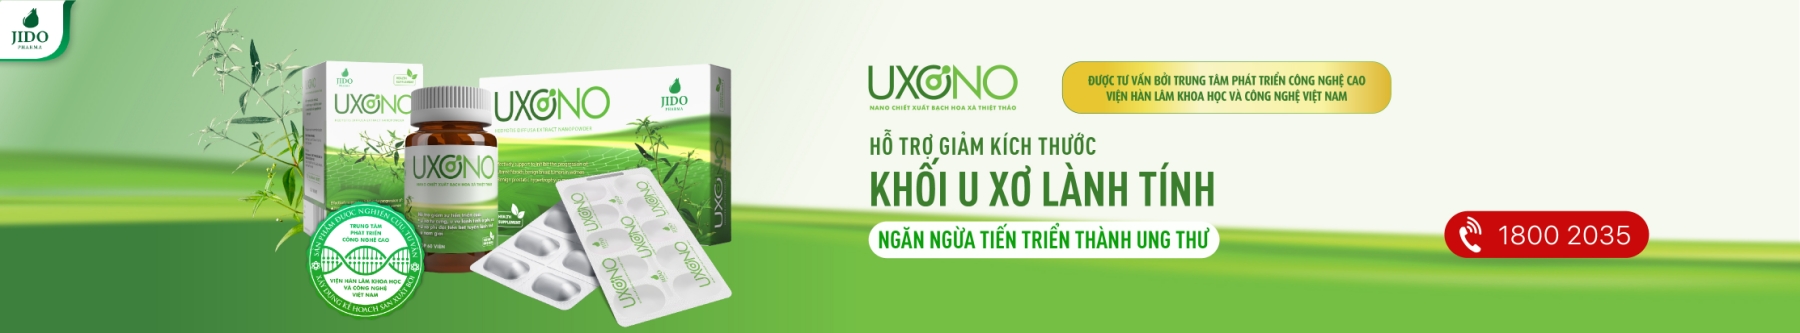 banner-uxono-website